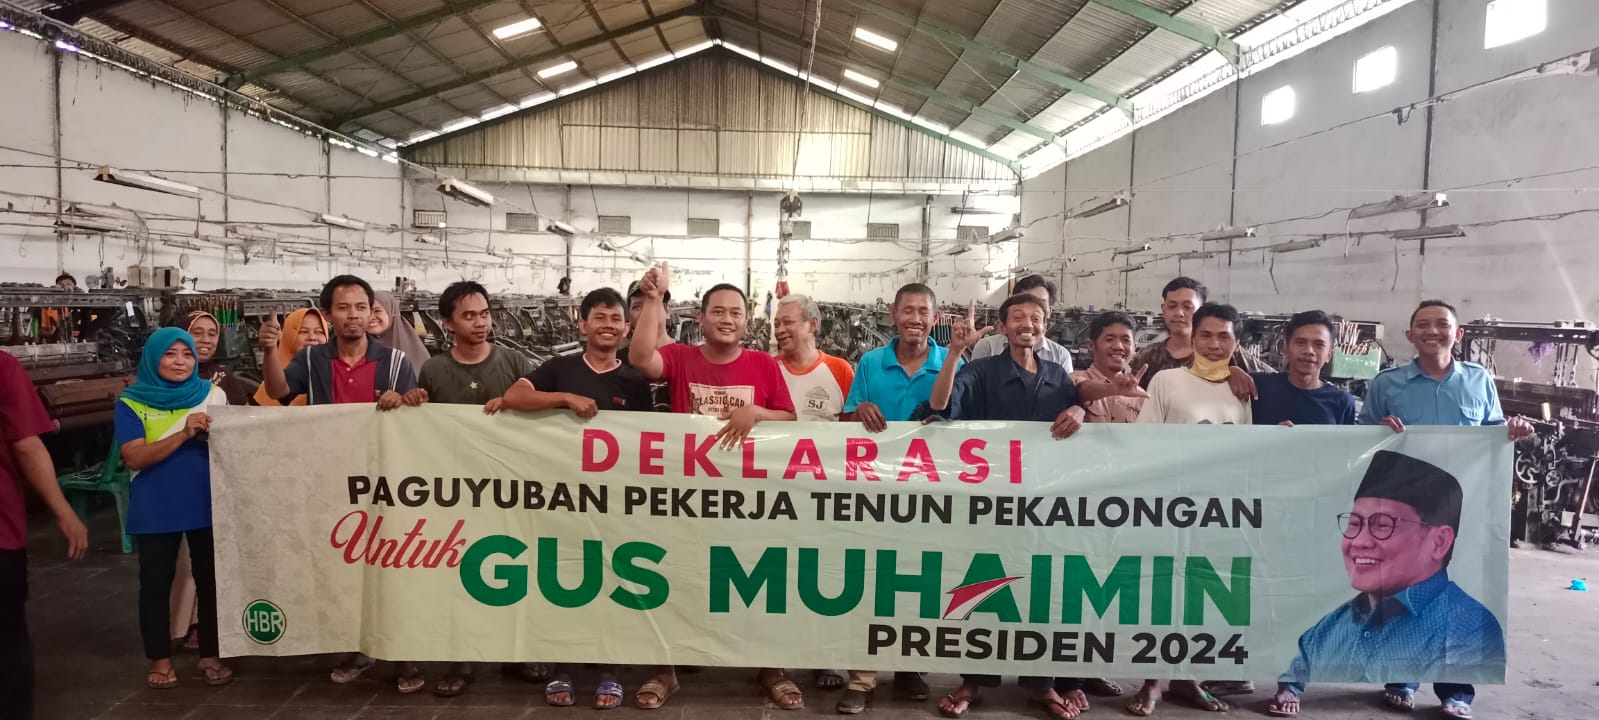 Pekerja Tenun Pekalongan Berikan Dukungan Gus Muhaimin Presiden 2024